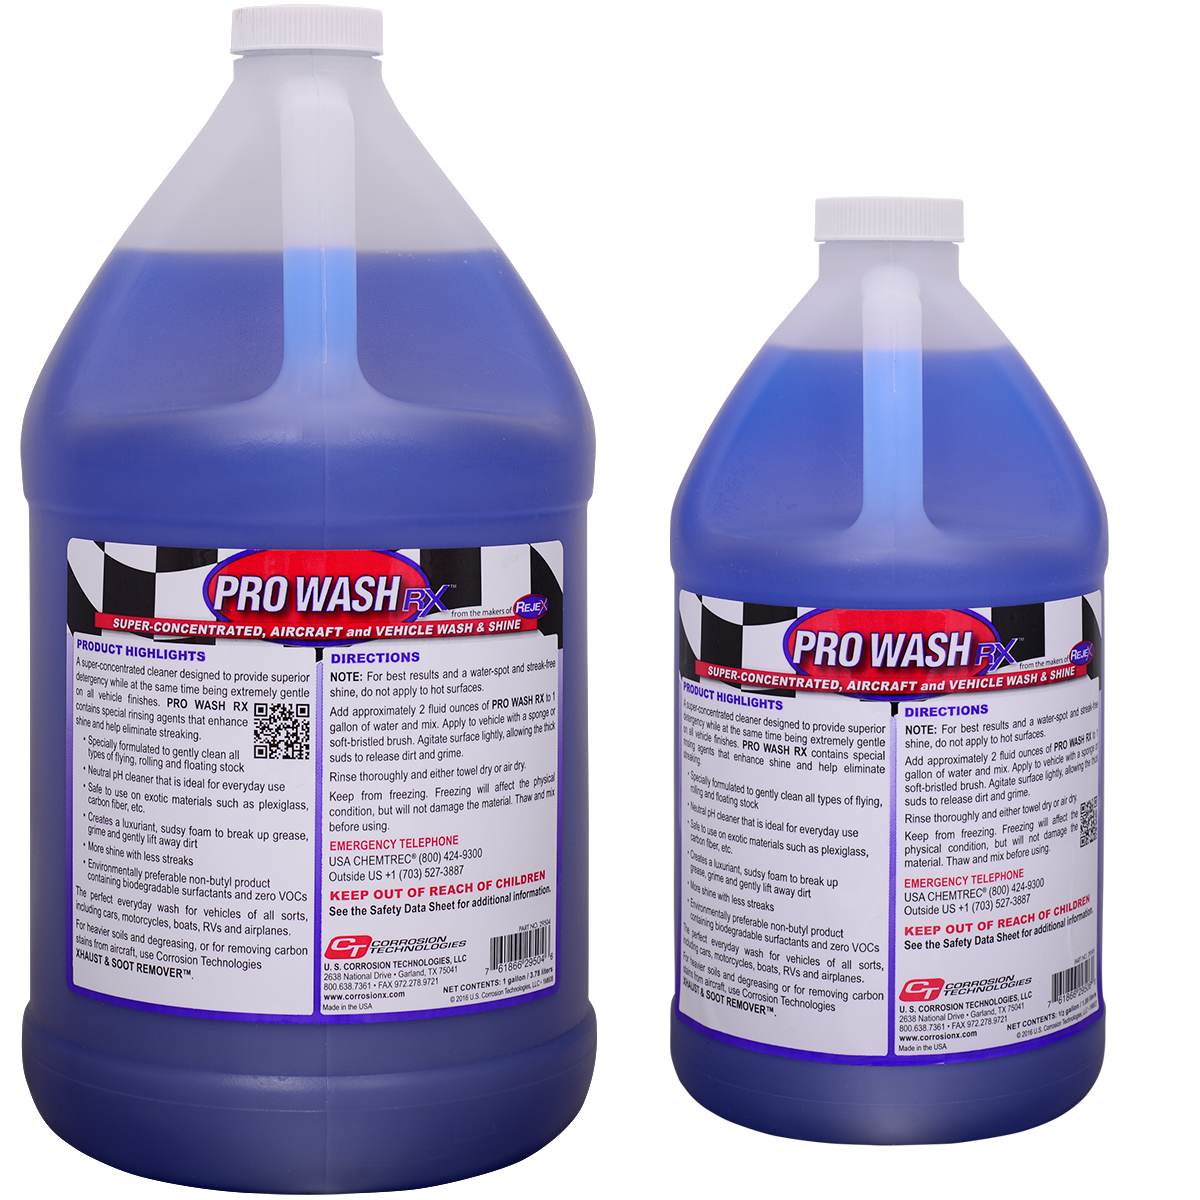 Factor 4 Instant Car Detailer Spray, 32 oz